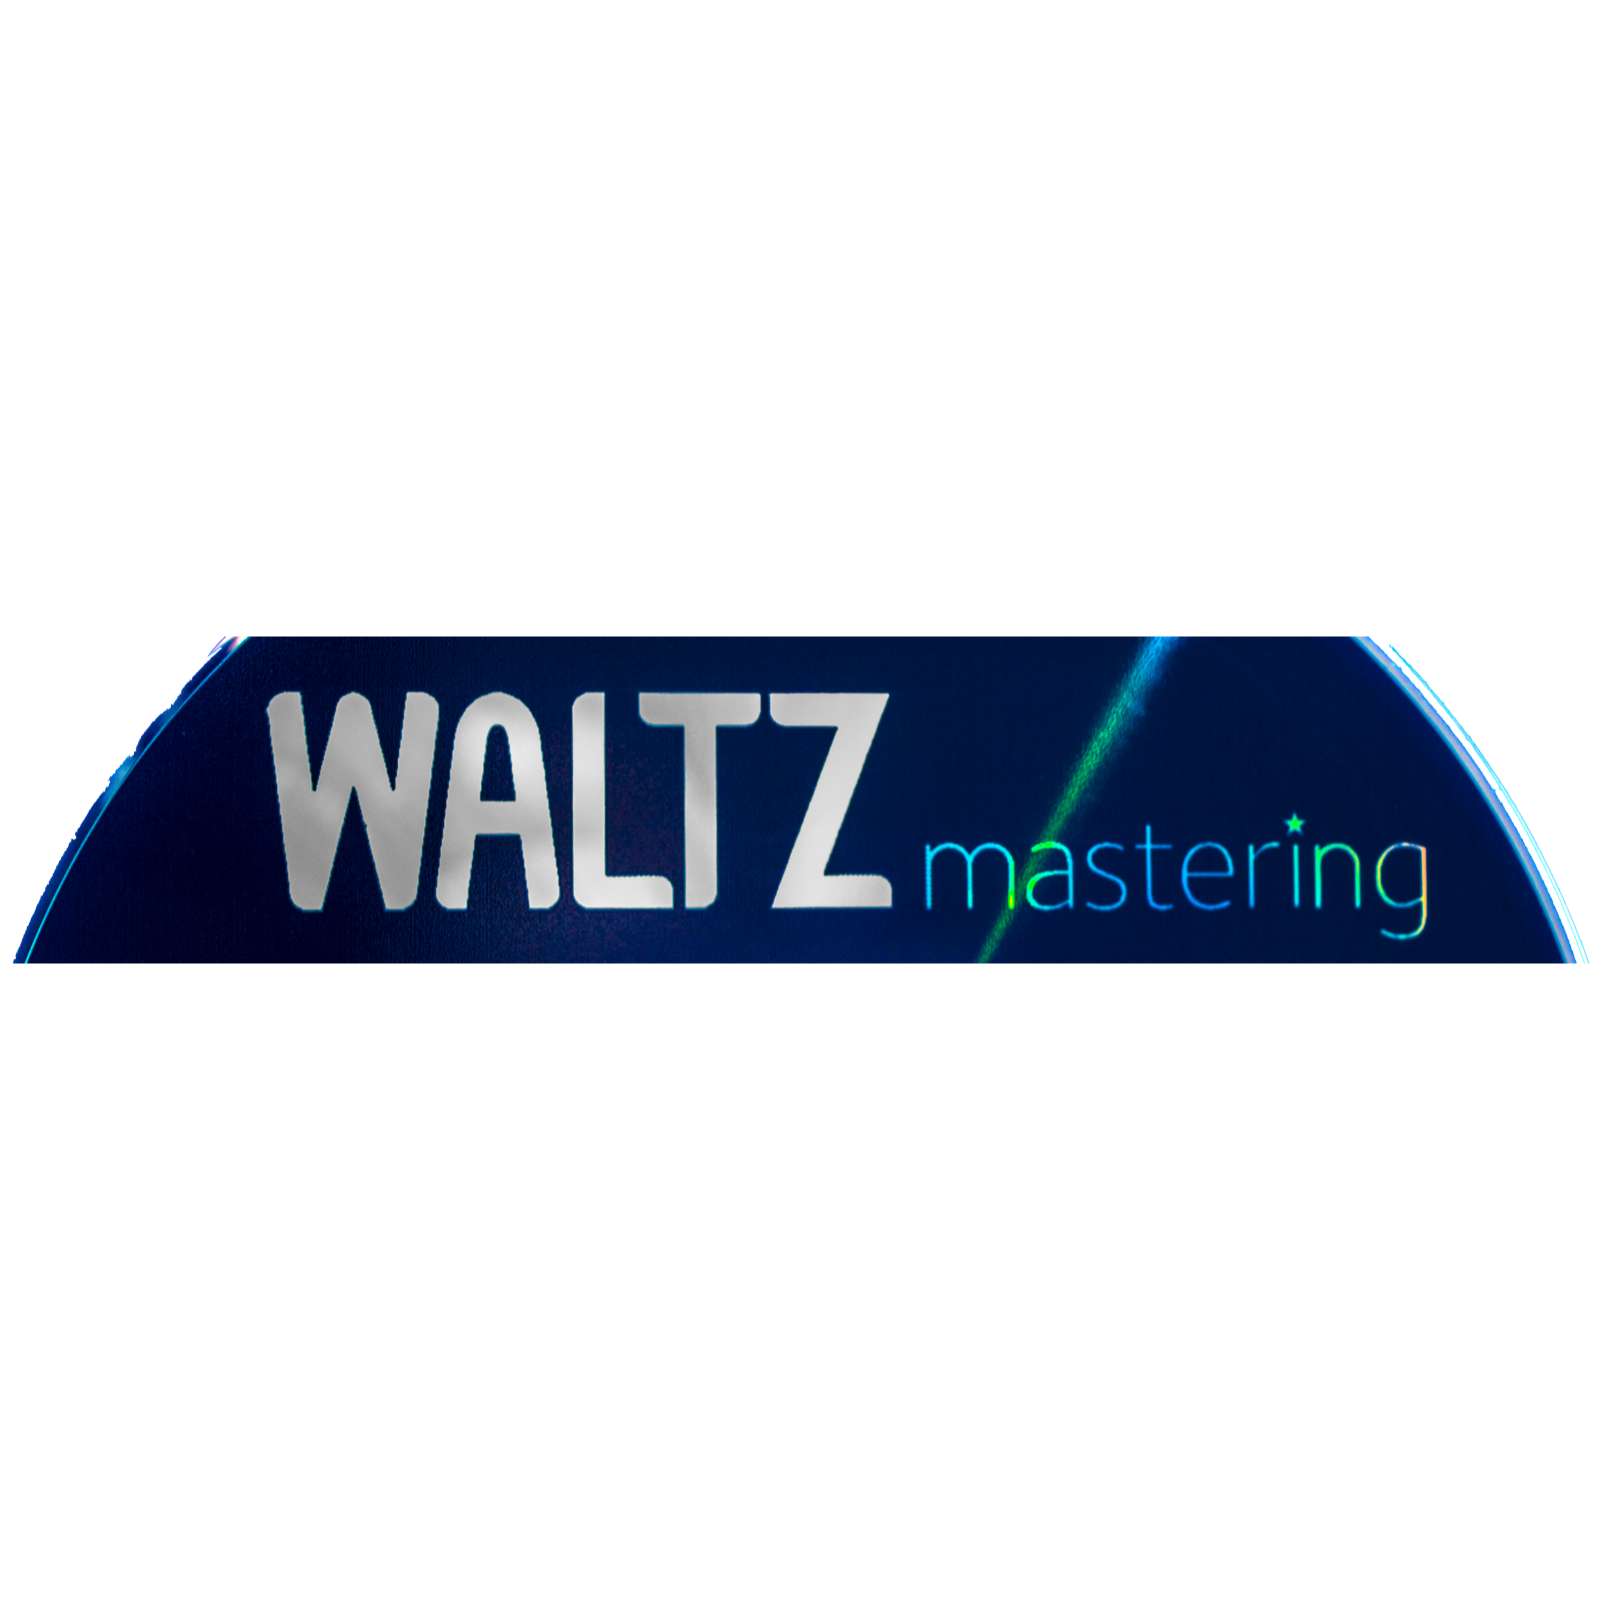 WALTZ MASTERING - Manlius, NY - (850)699-1622 | ShowMeLocal.com